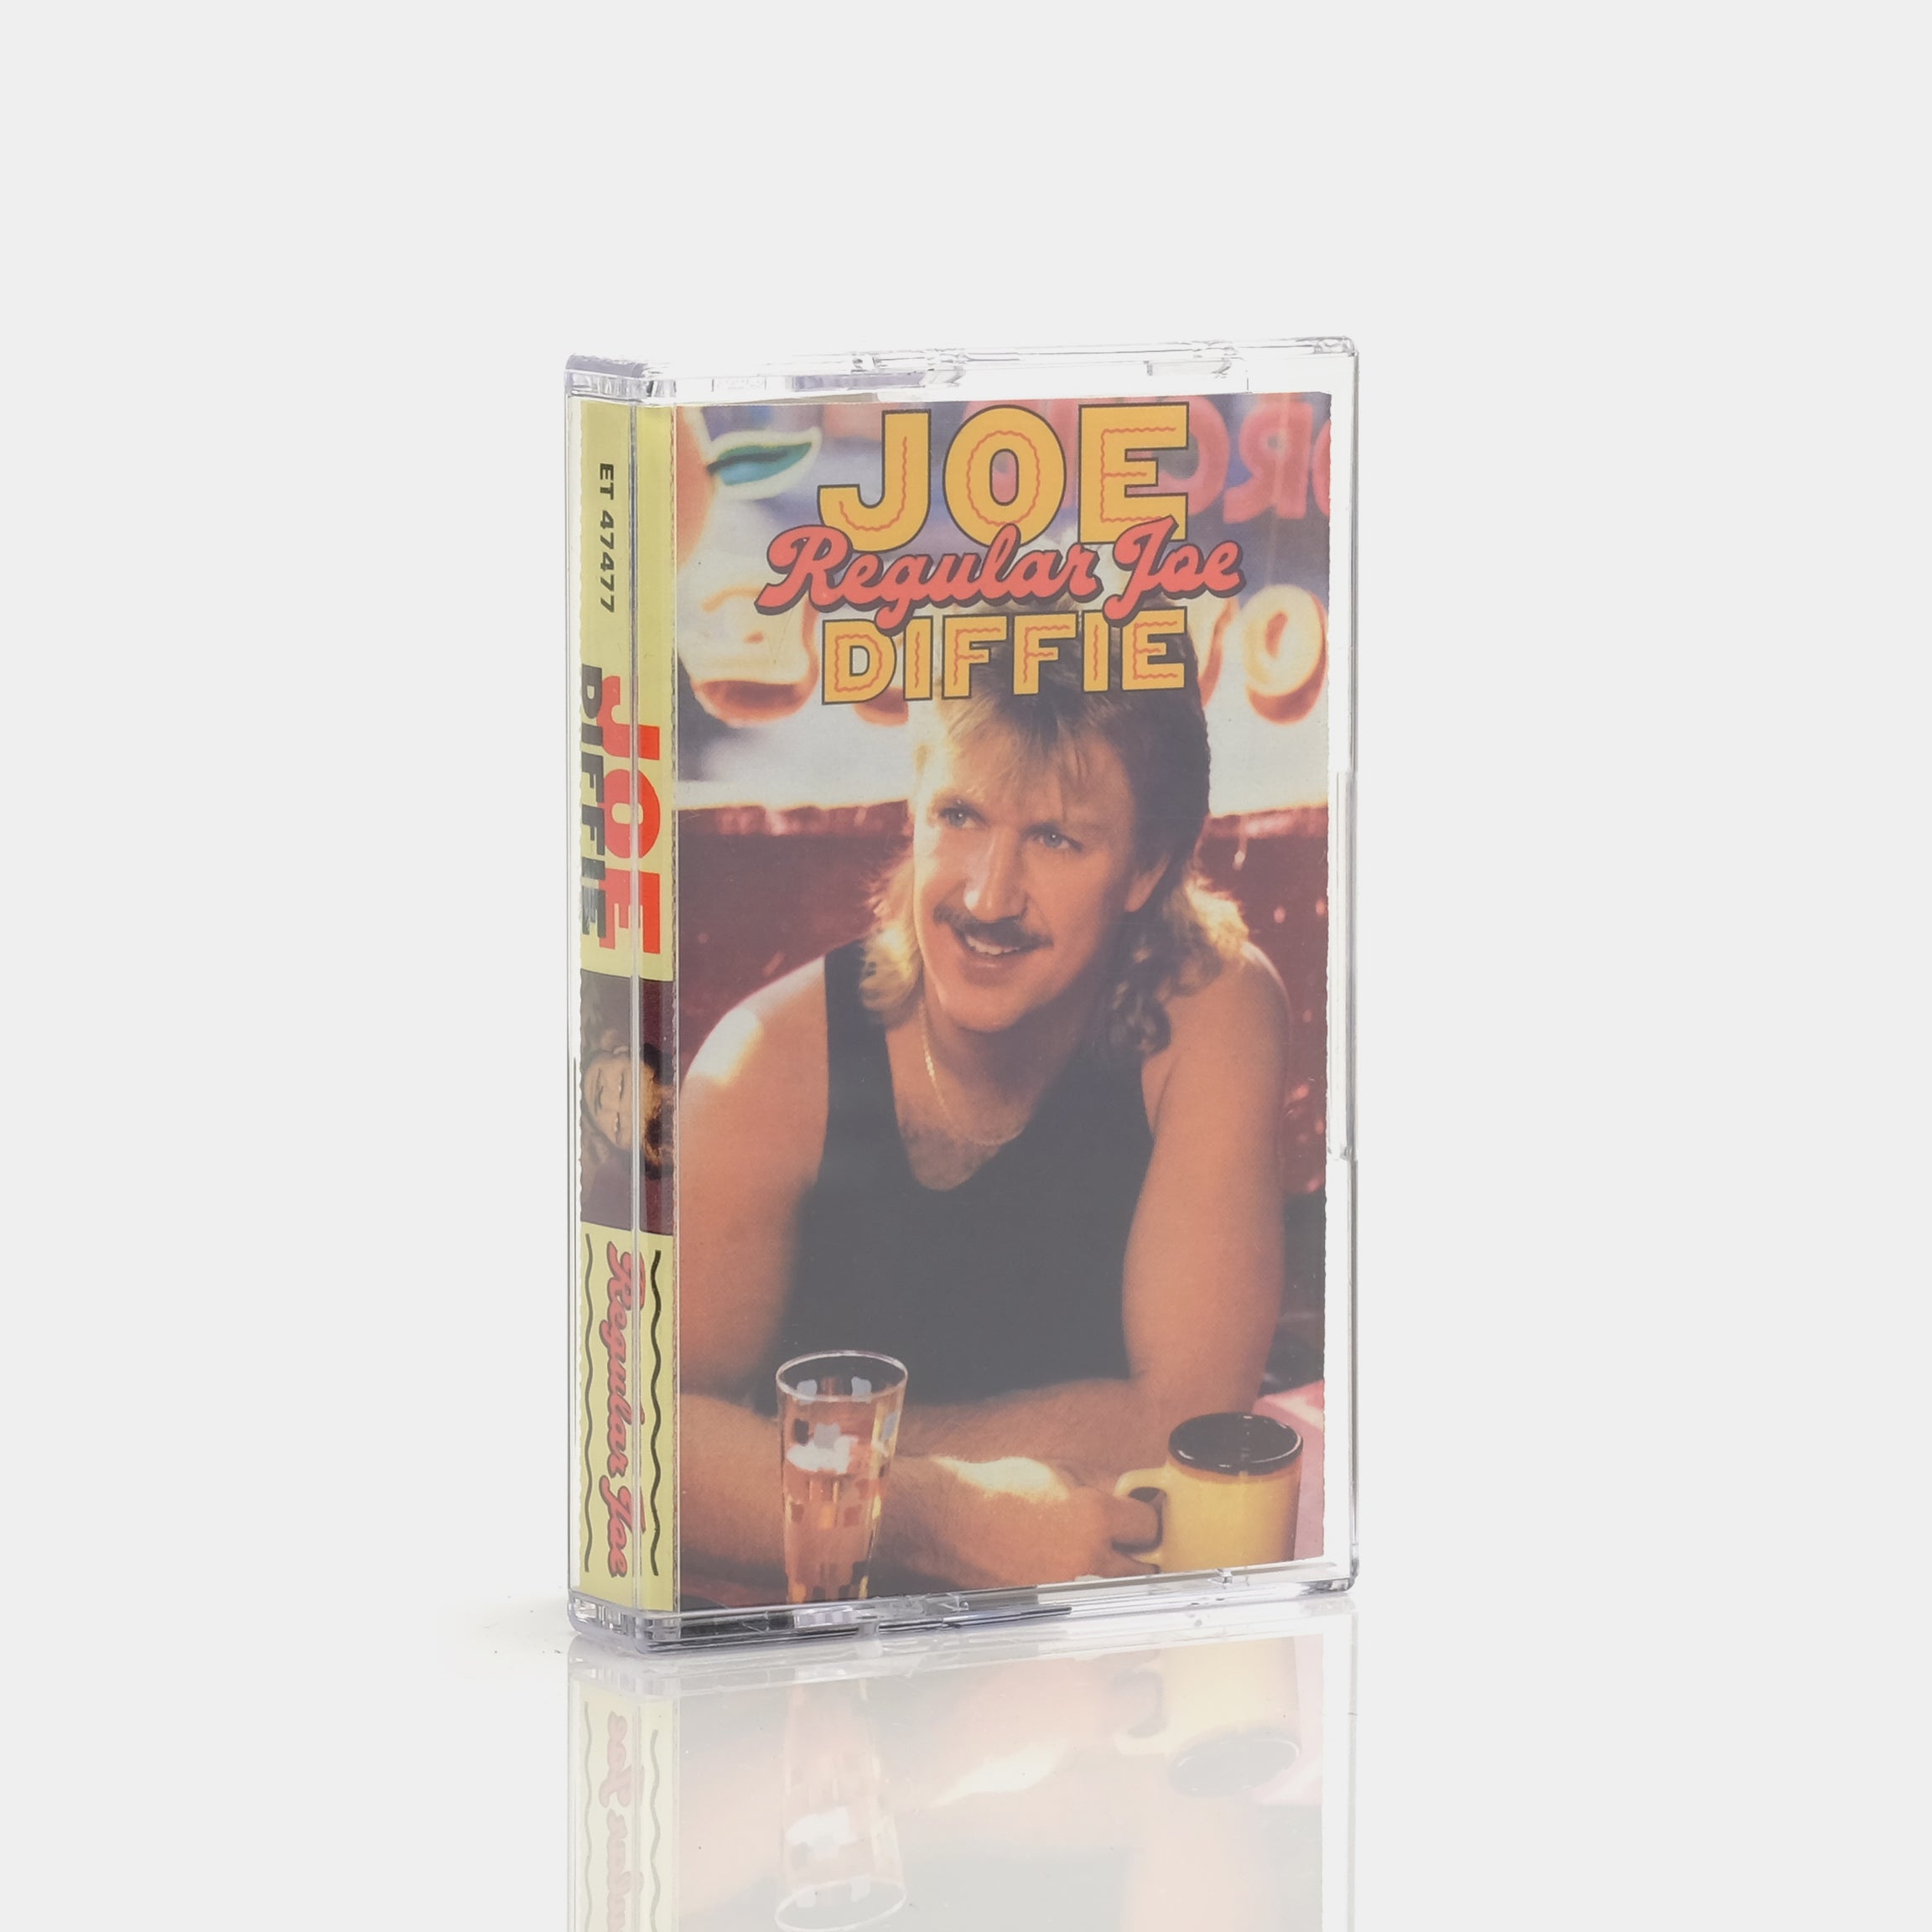 Joe Diffie - Regular Joe Cassette Tape